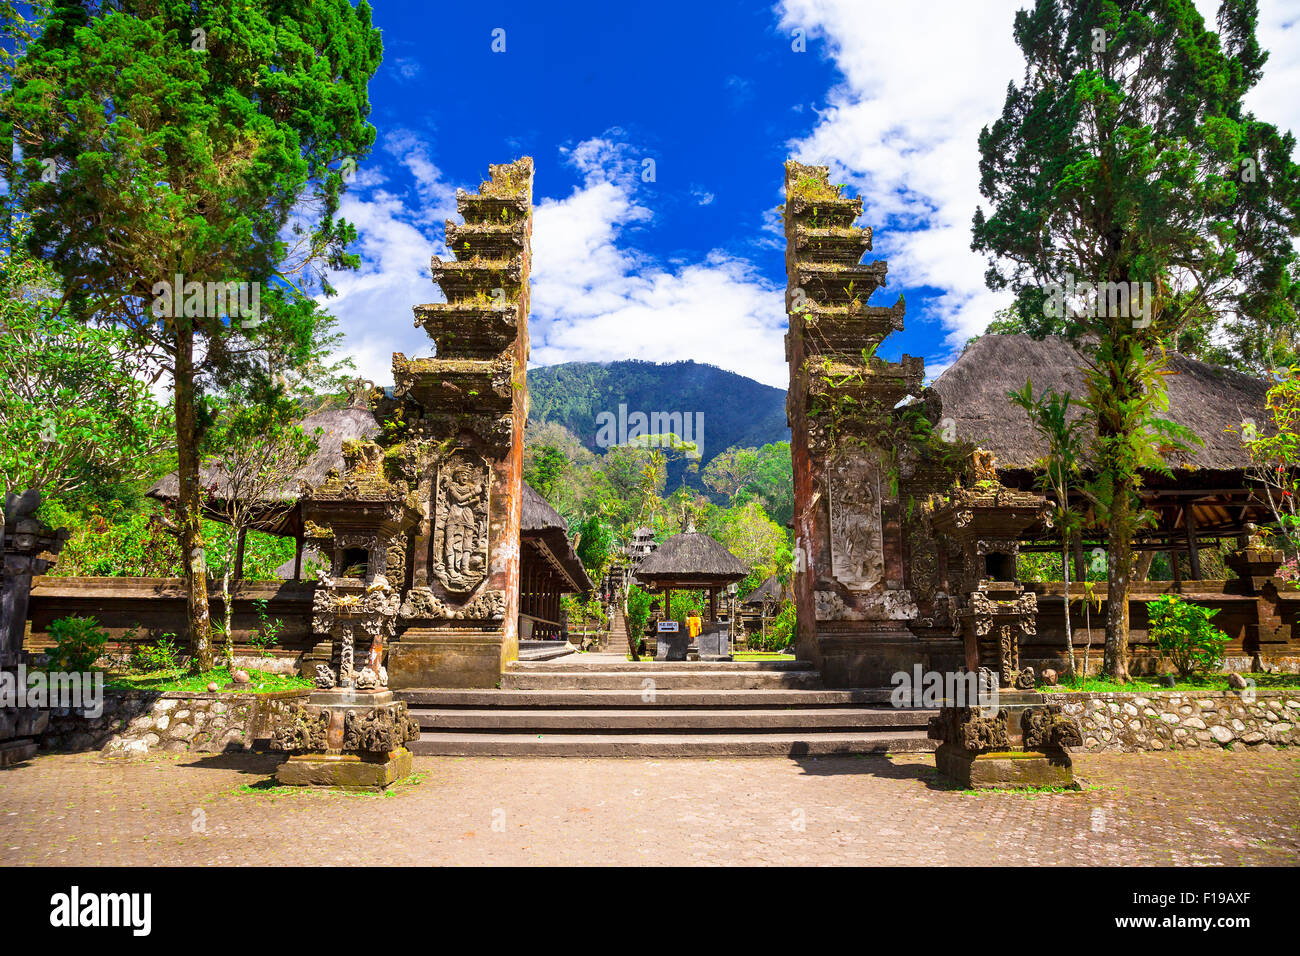 ancient balinesian temples Stock Photo